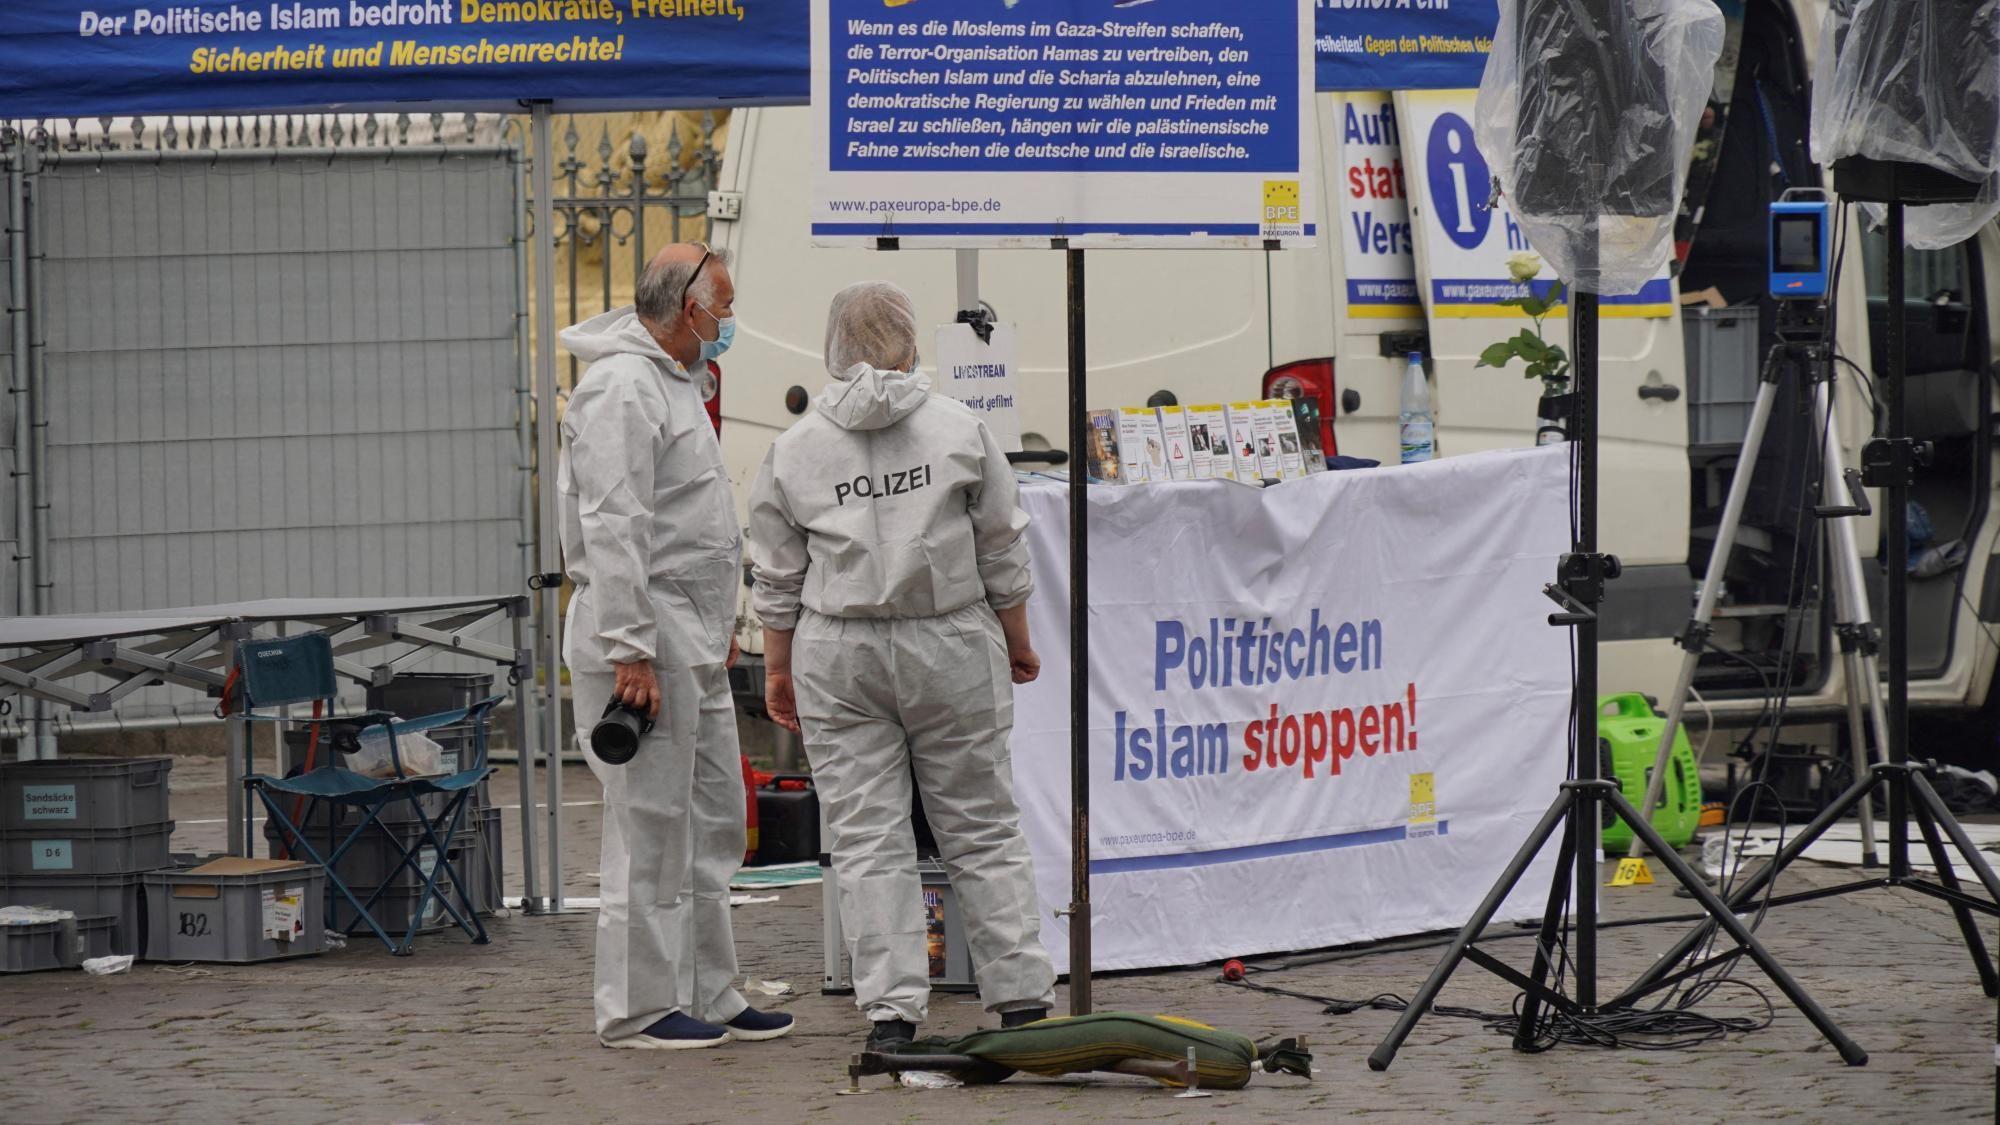 Police officer injured in Mannheim stabbing dies